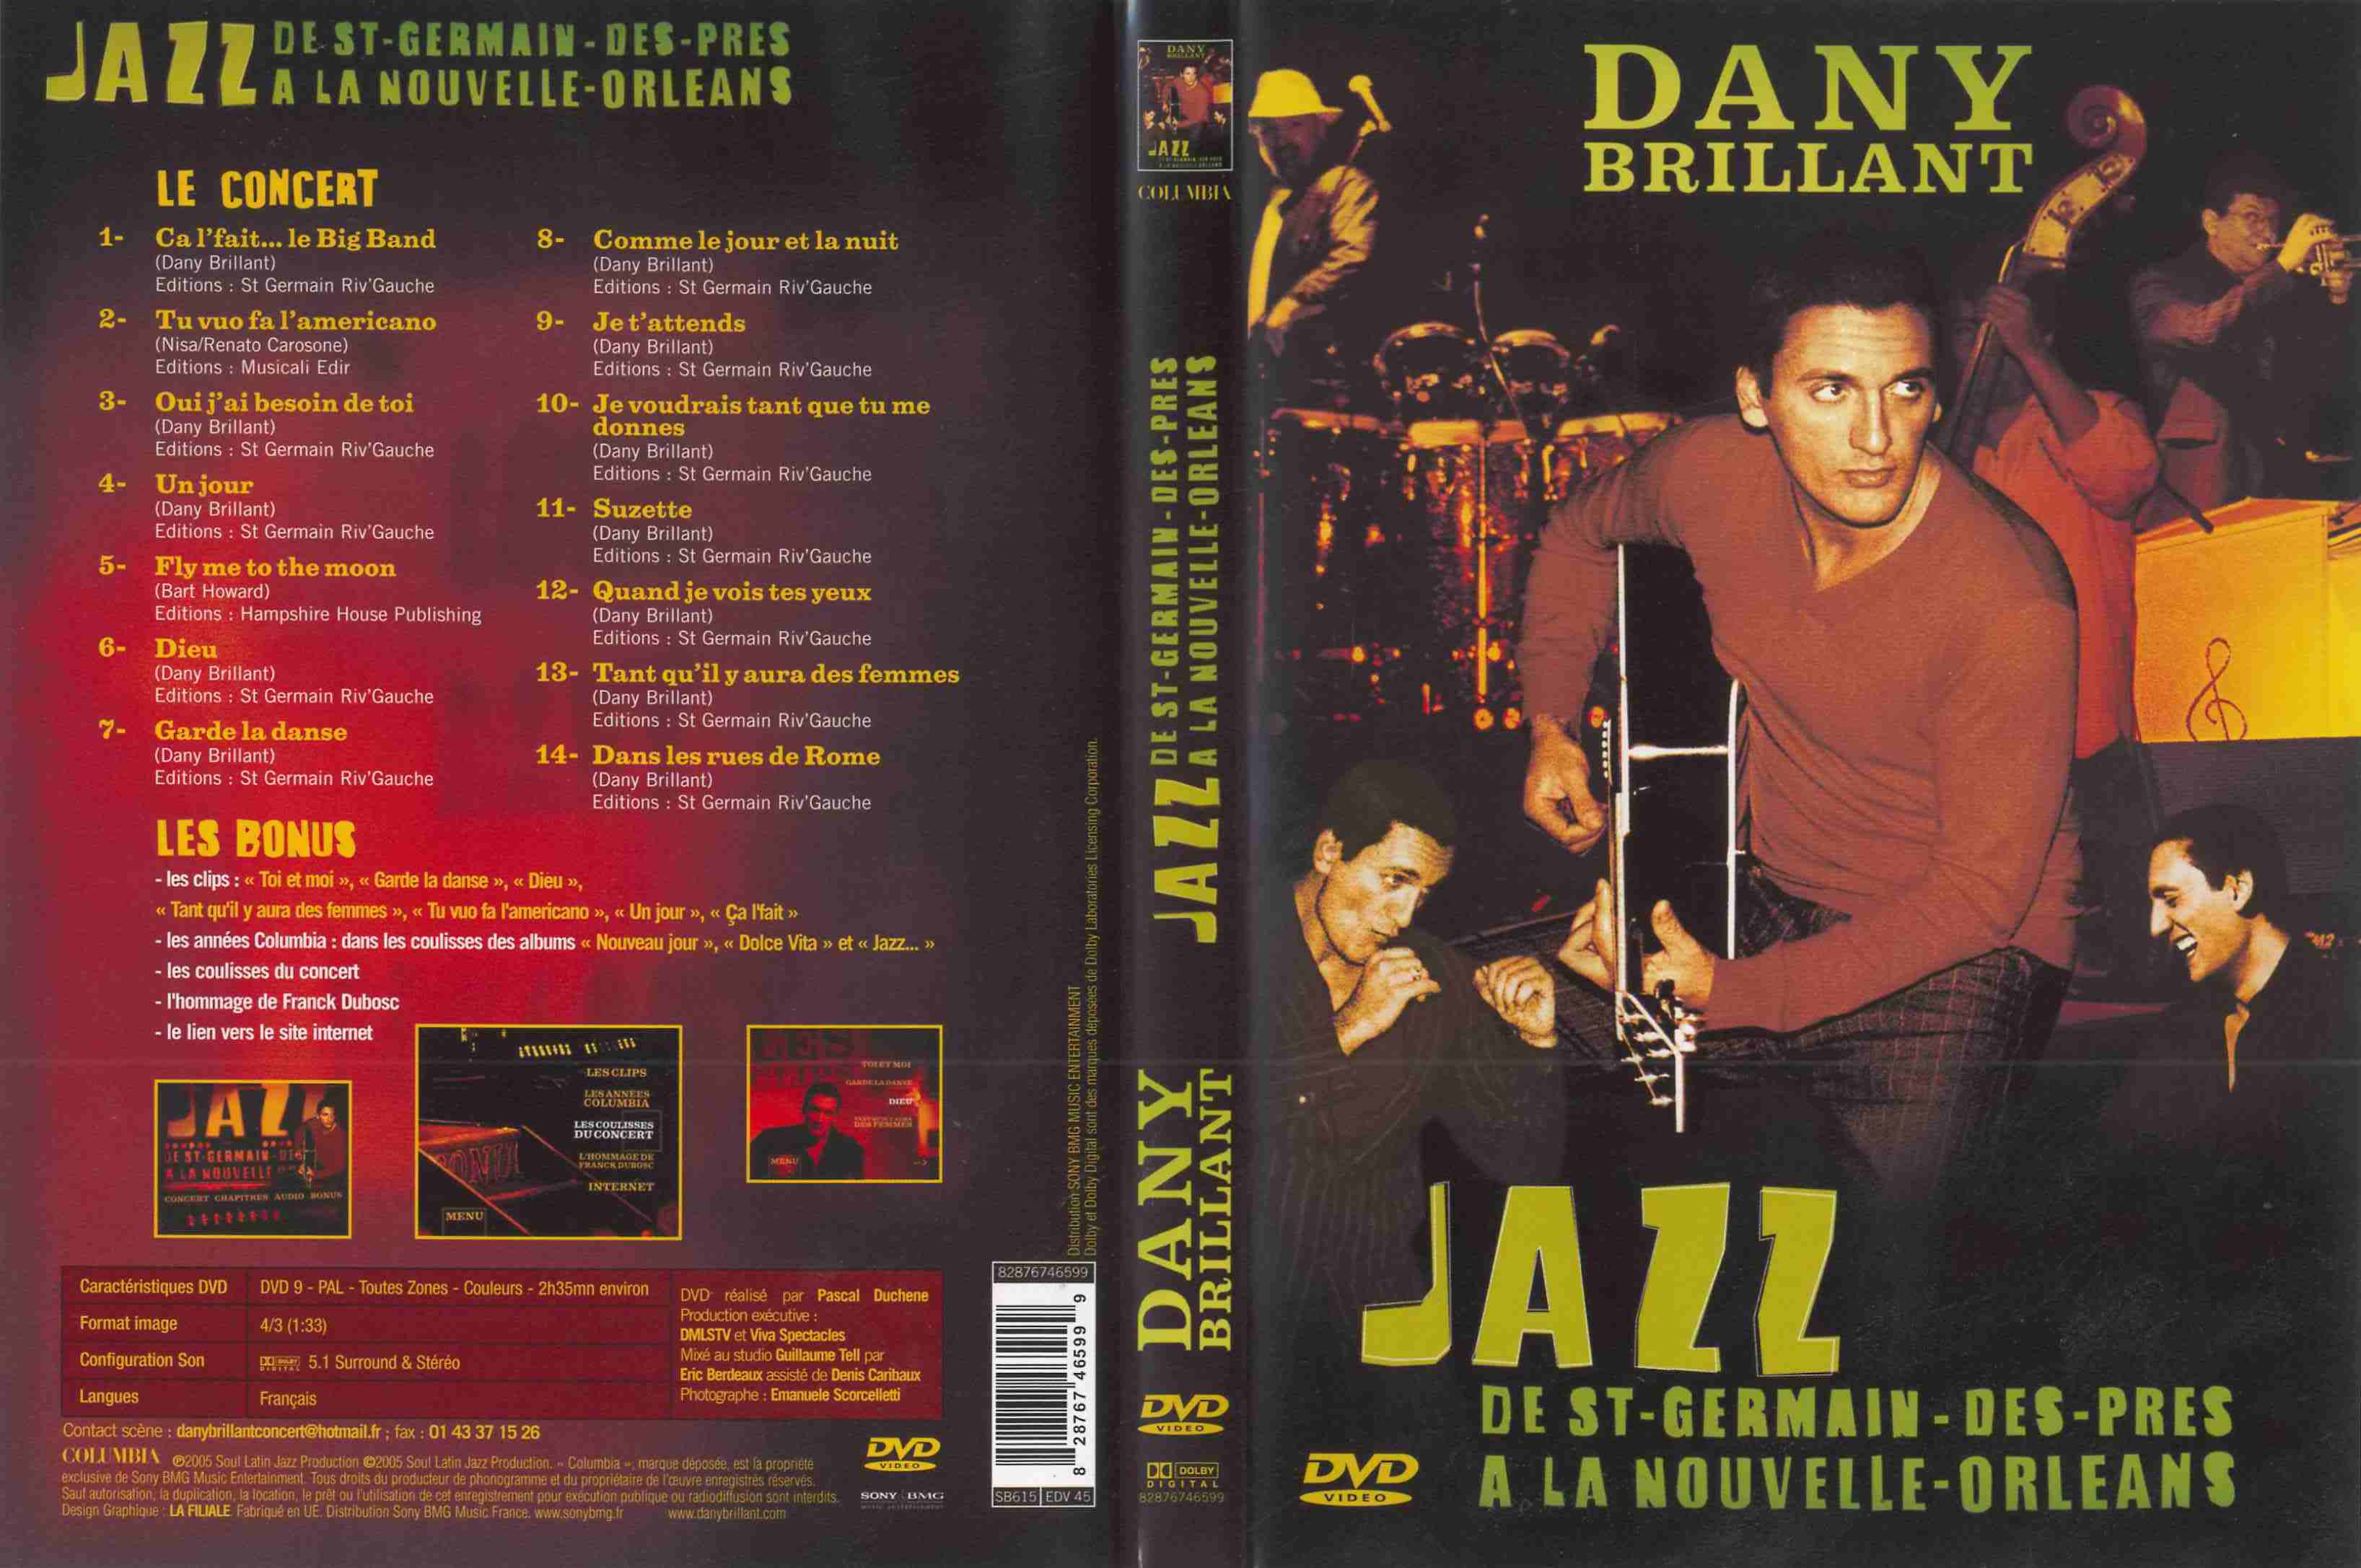 Jaquette DVD Dany Brillant Jazz Concert